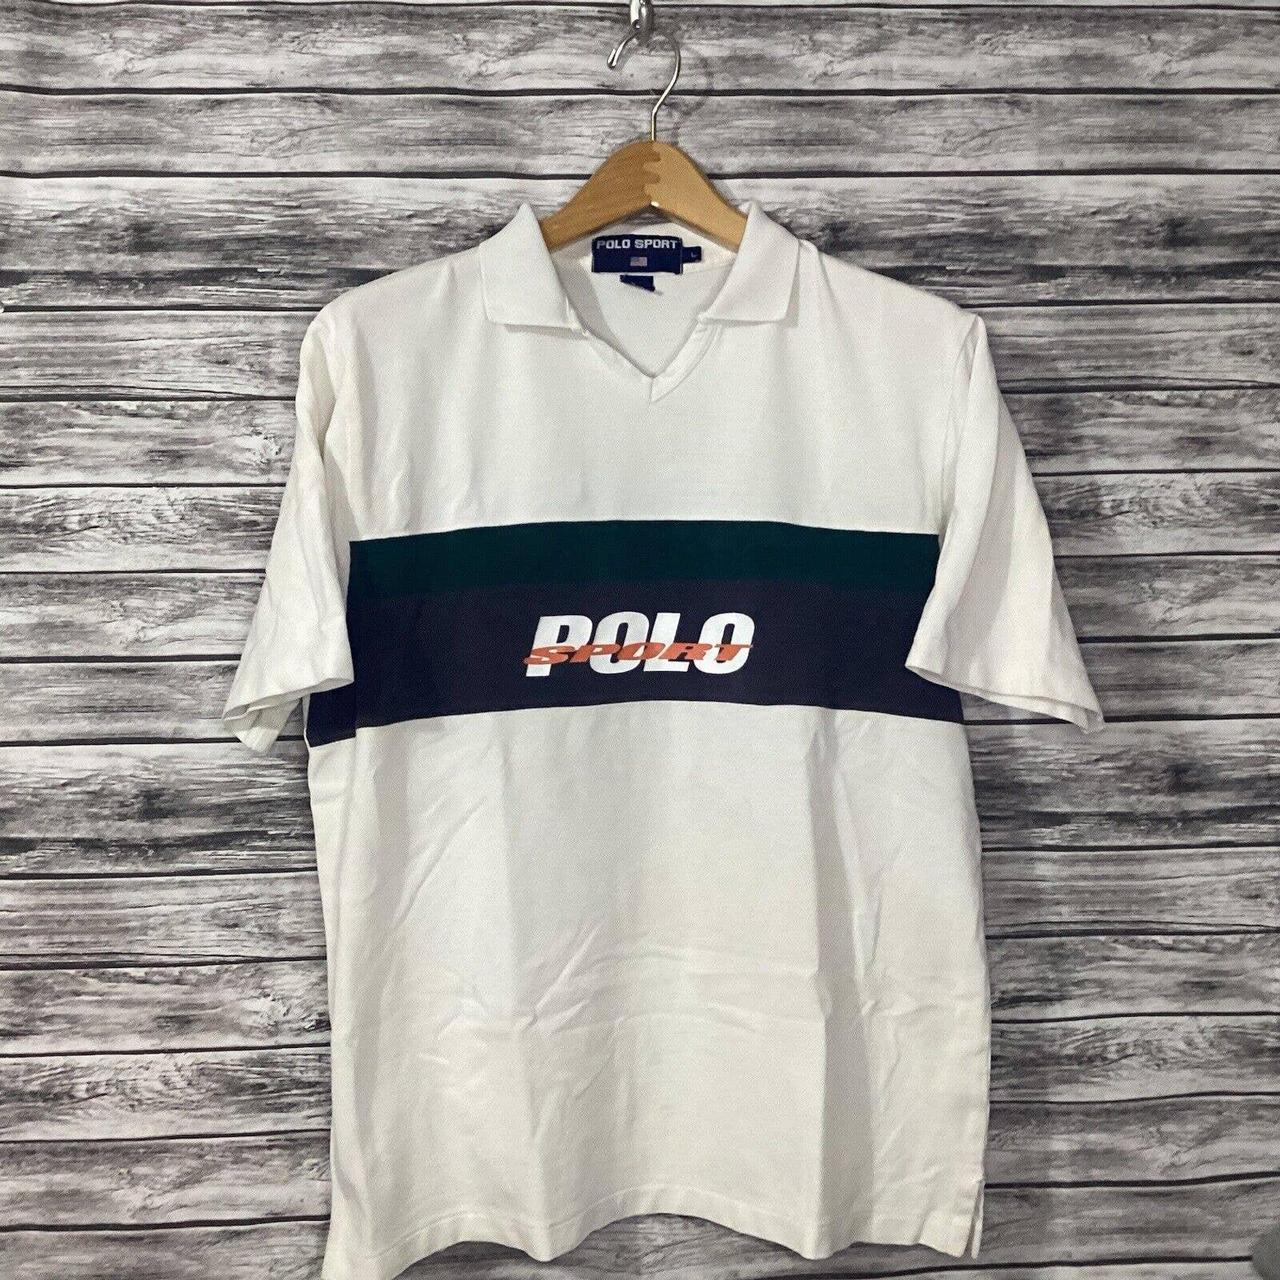 POLO SPORT RALPH LAUREN Vintage Polo Shirt VTG 90s... - Depop